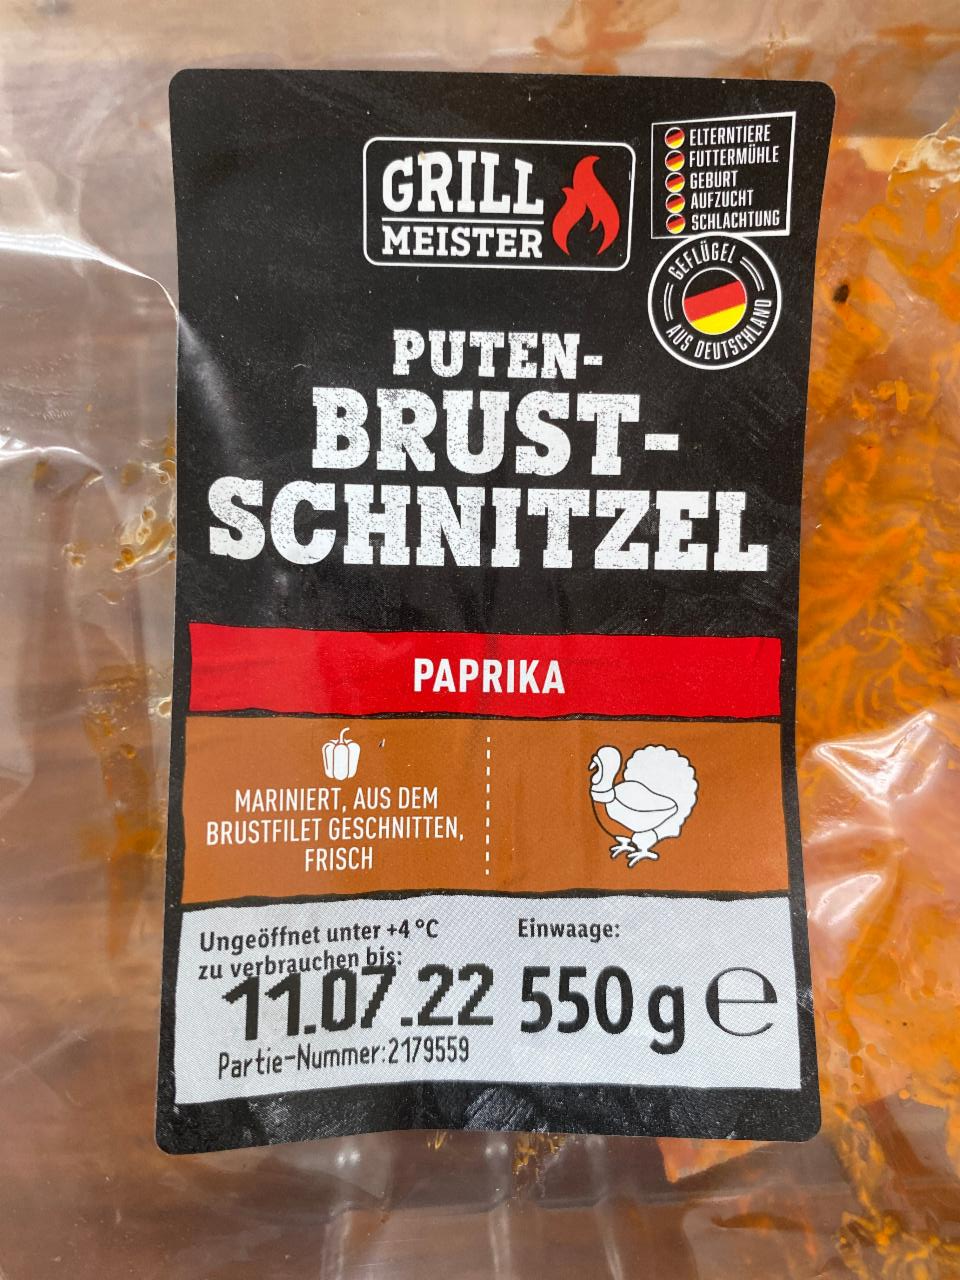 Fotografie - Puten Brust Schnitzel Paprika Grill Meister